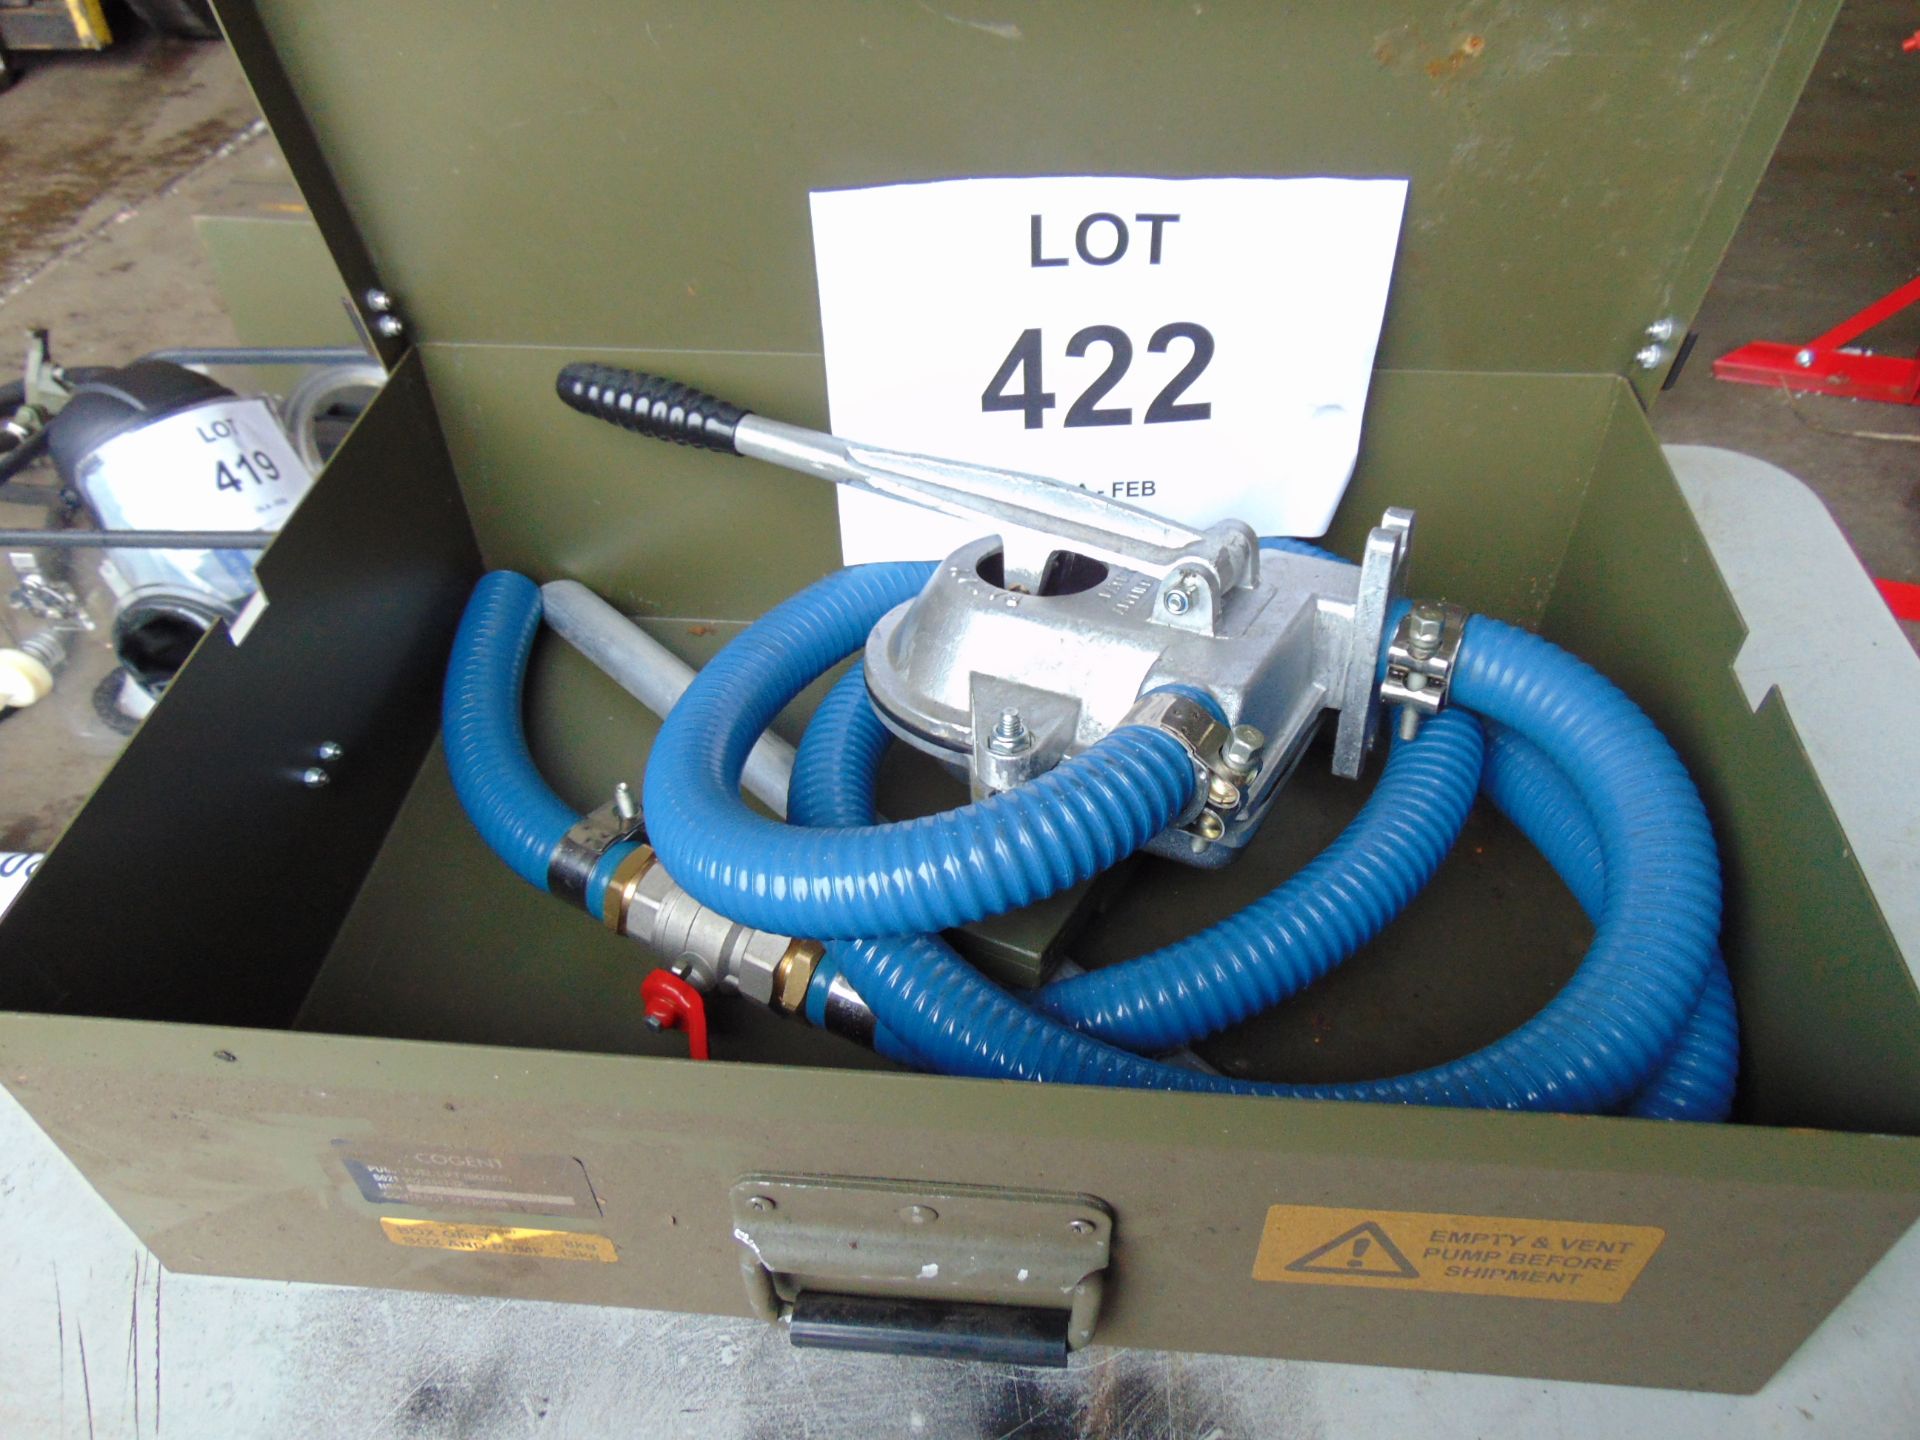 New Unissued Patay Refuelling pump set